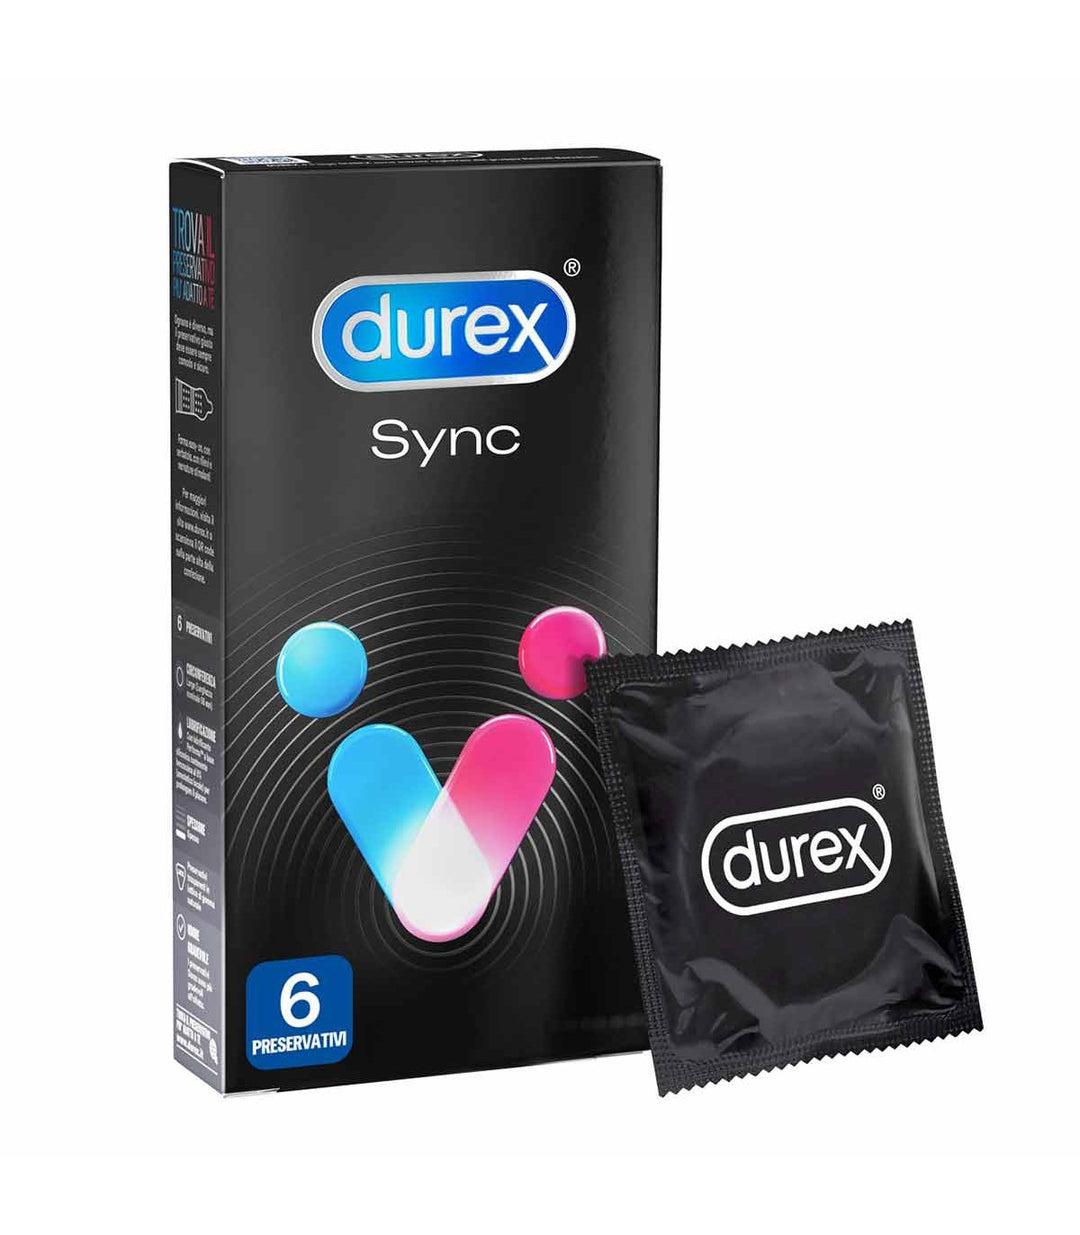 lubricated condoms 6 pcs